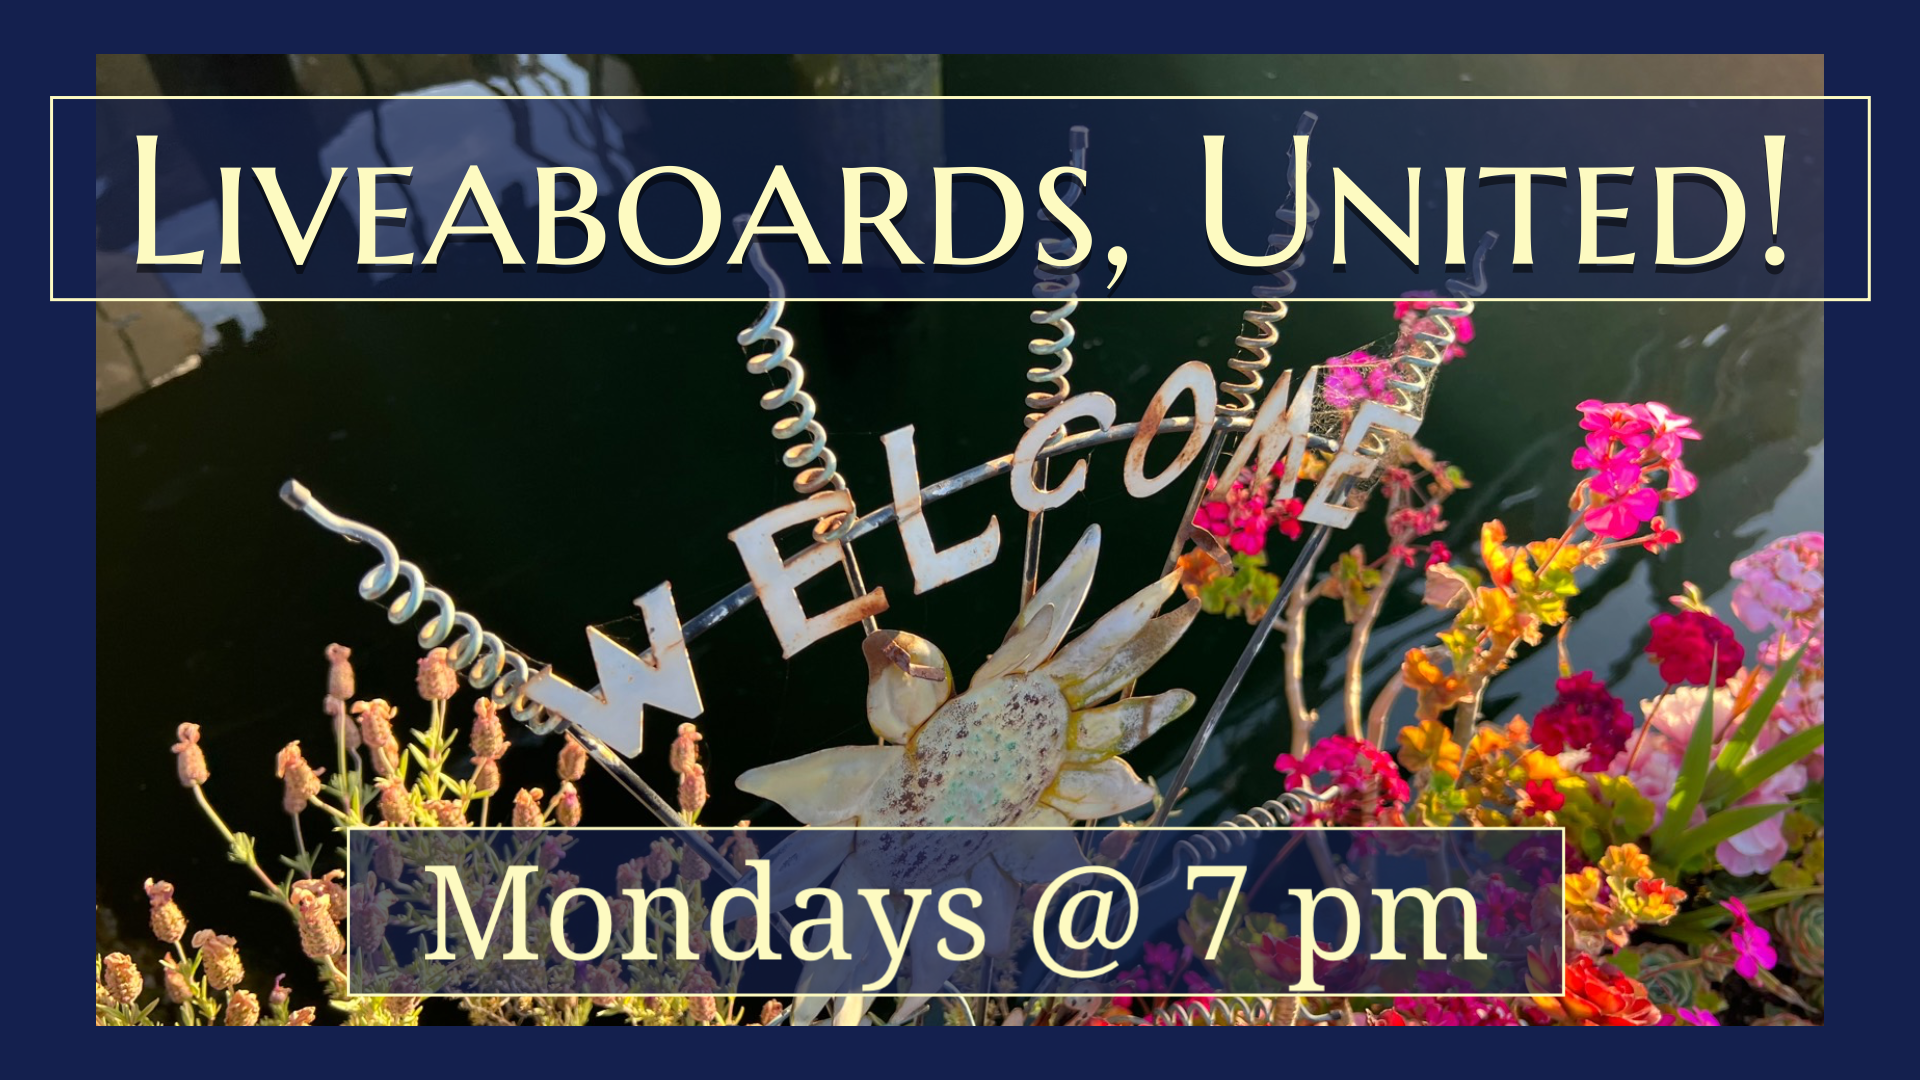 Liveaboards, United! Mondays @ 7 pm